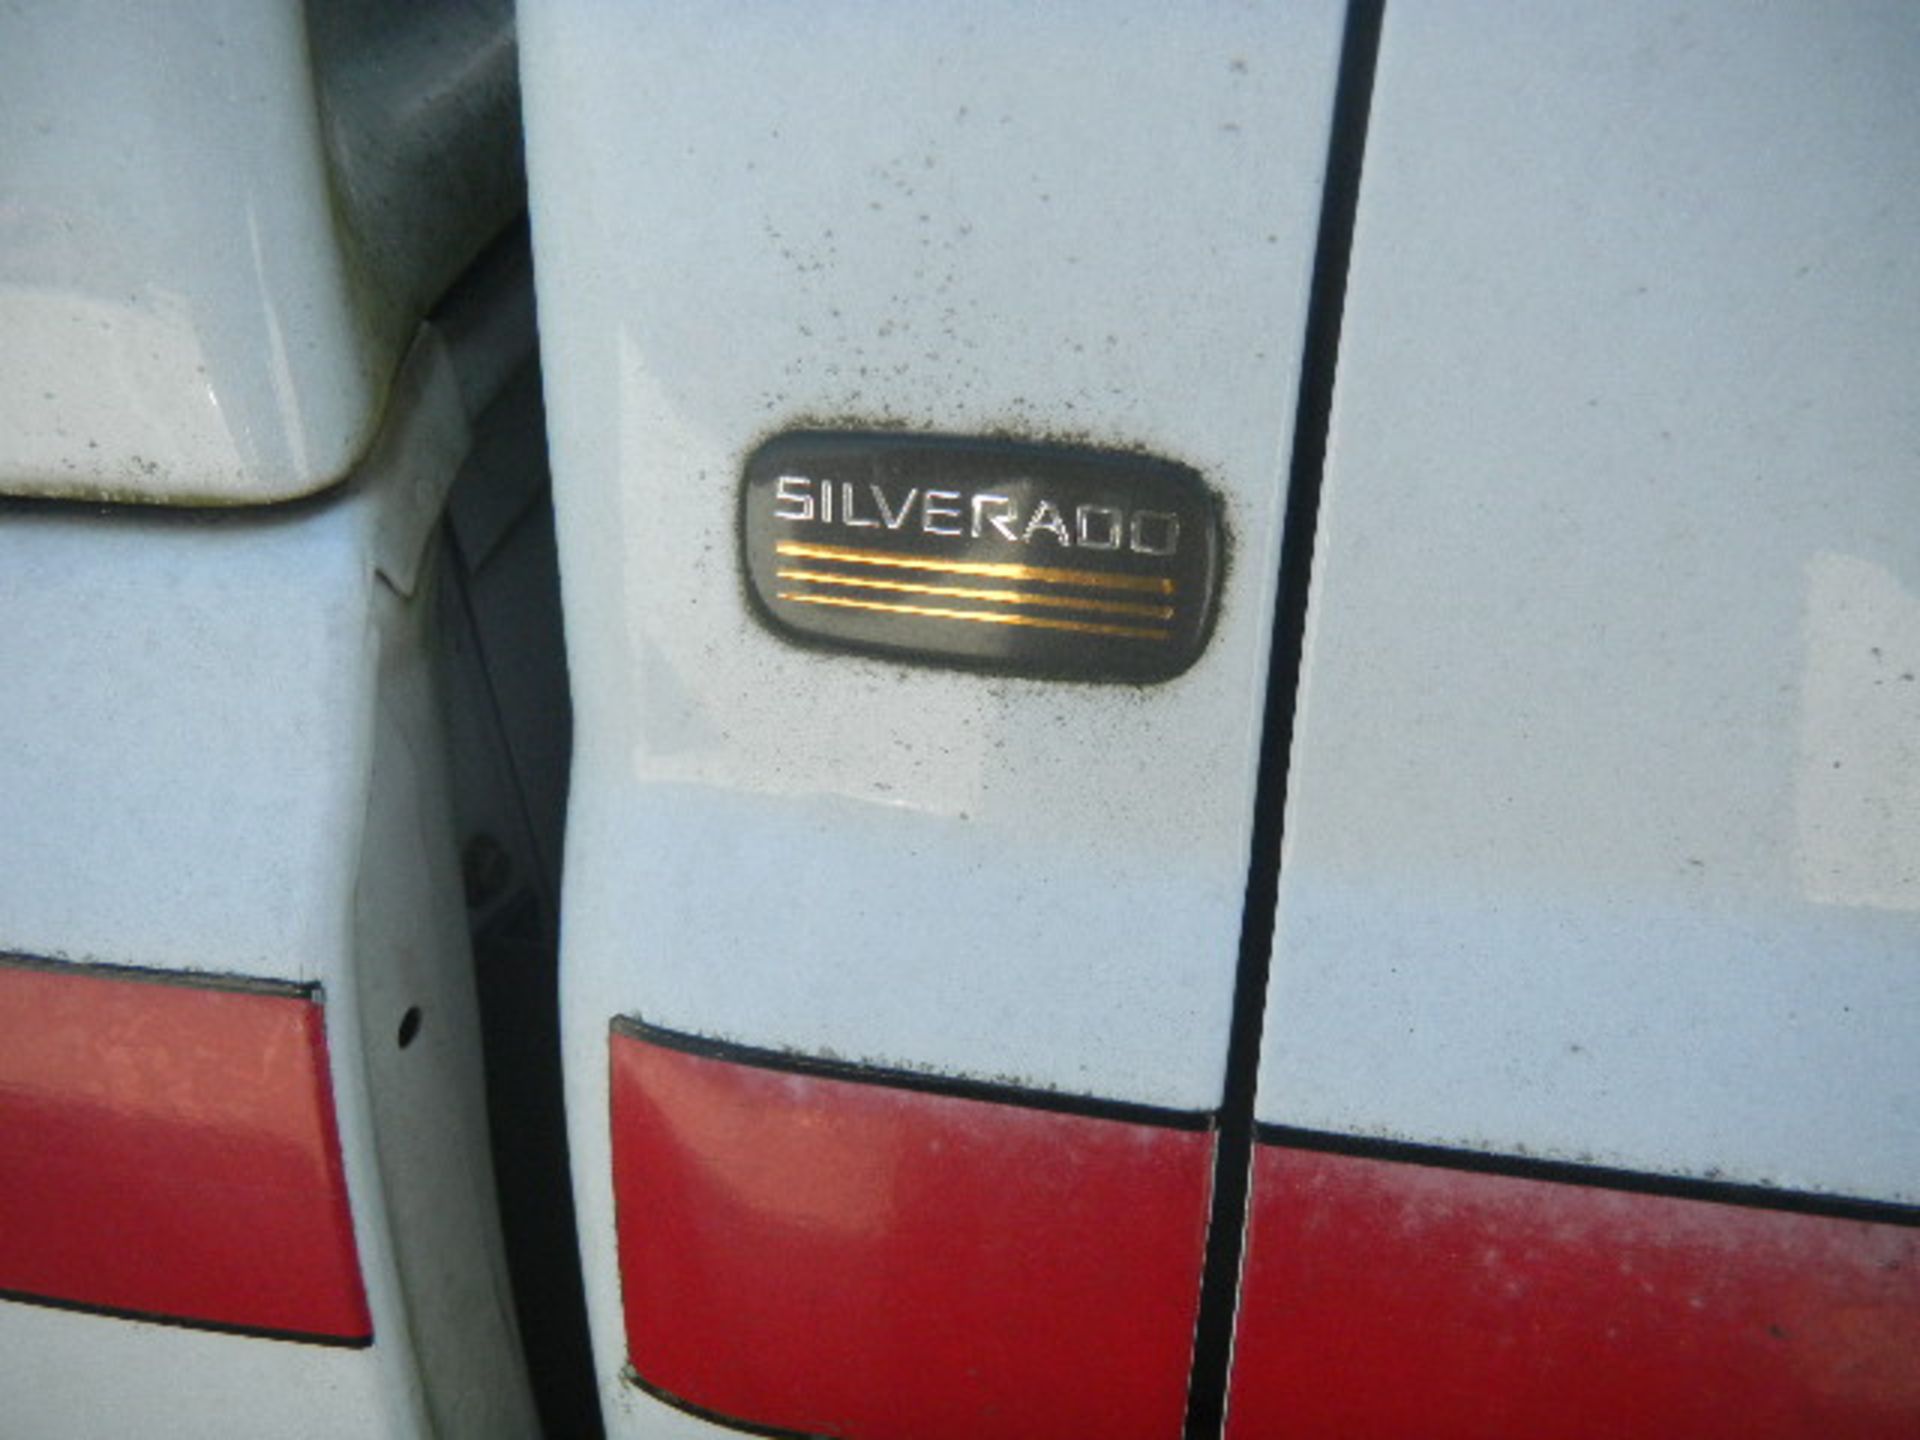 2005 Chevrolet 1500 Silverado Pickup Truck with Camper - Asset I.D. #153 - Last of Vin (243253) - Image 5 of 8